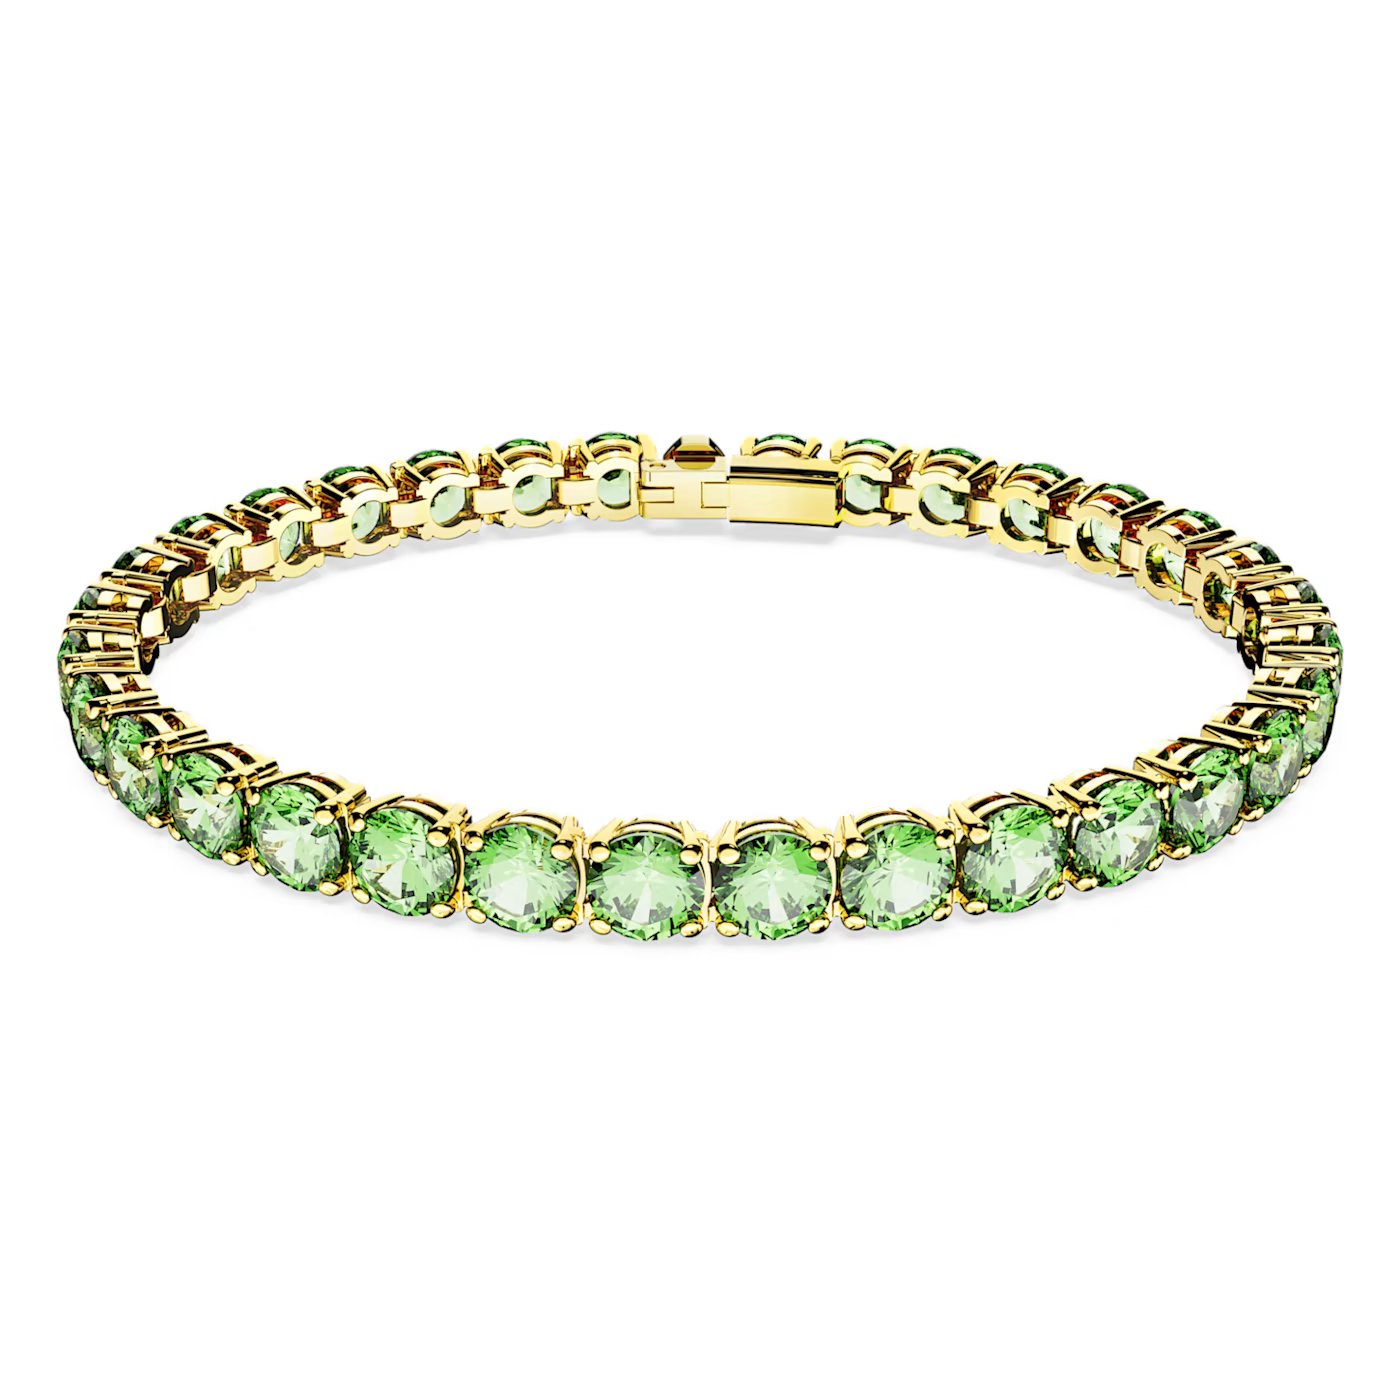 6425a7a7db2ad_matrix-tennis-bracelet--round-cut--medium--green--gold-tone-plated-swarovski-5658850.jpg